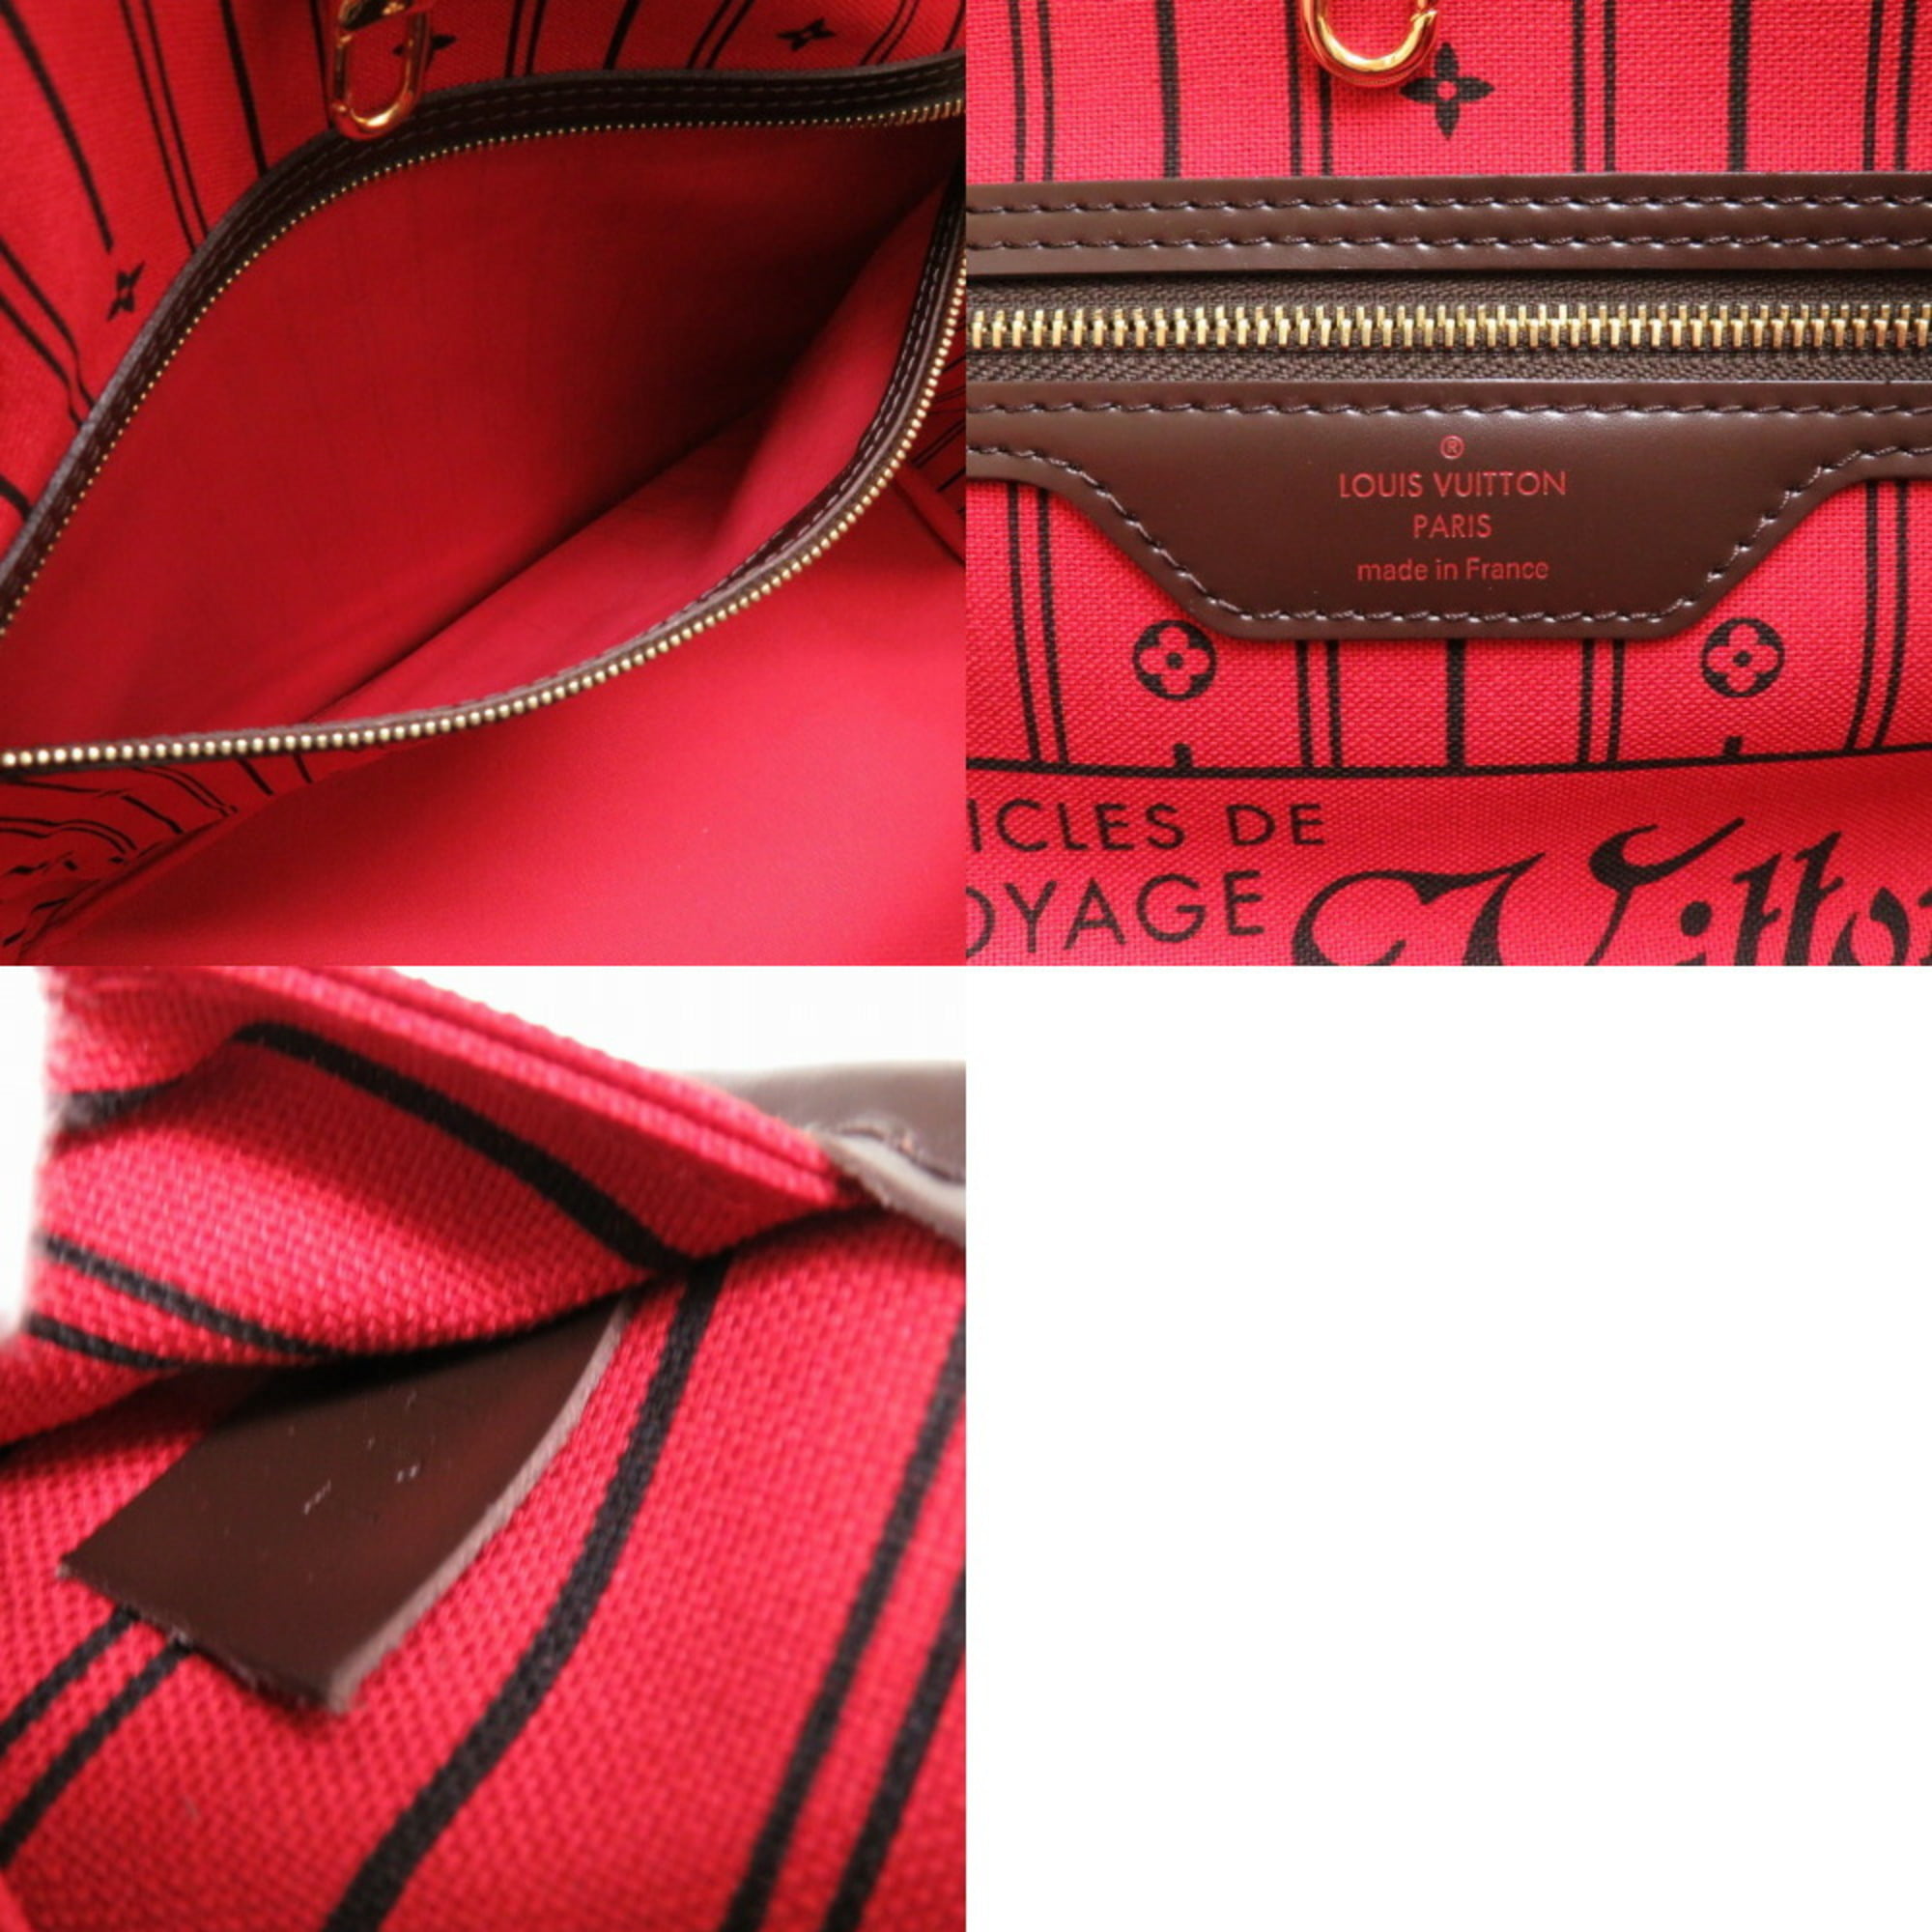 Authenticated used Louis Vuitton Damier Neverfull GM Tote Bag N51106, Adult Unisex, Size: (HxWxD): 32cm x 39cm x 19cm / 12.59'' x 15.35'' x 7.48